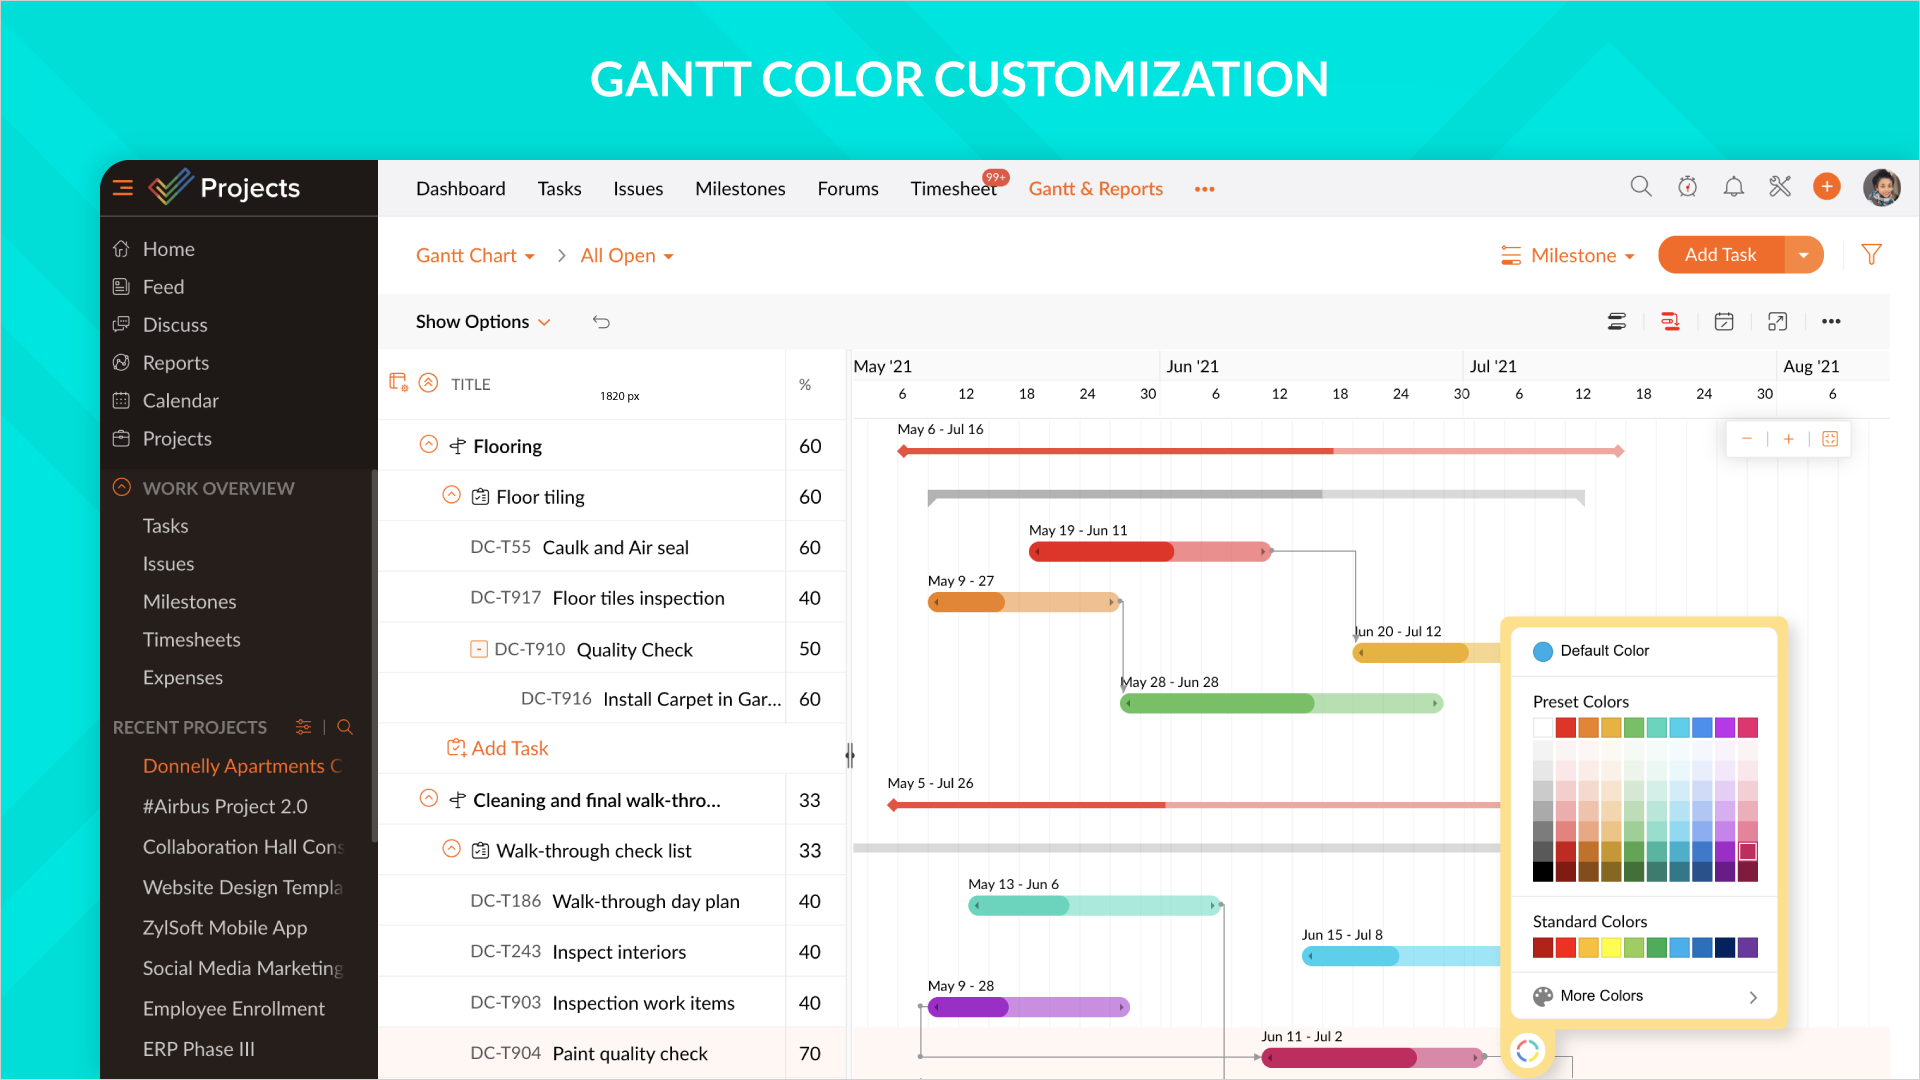 Gantt color customization